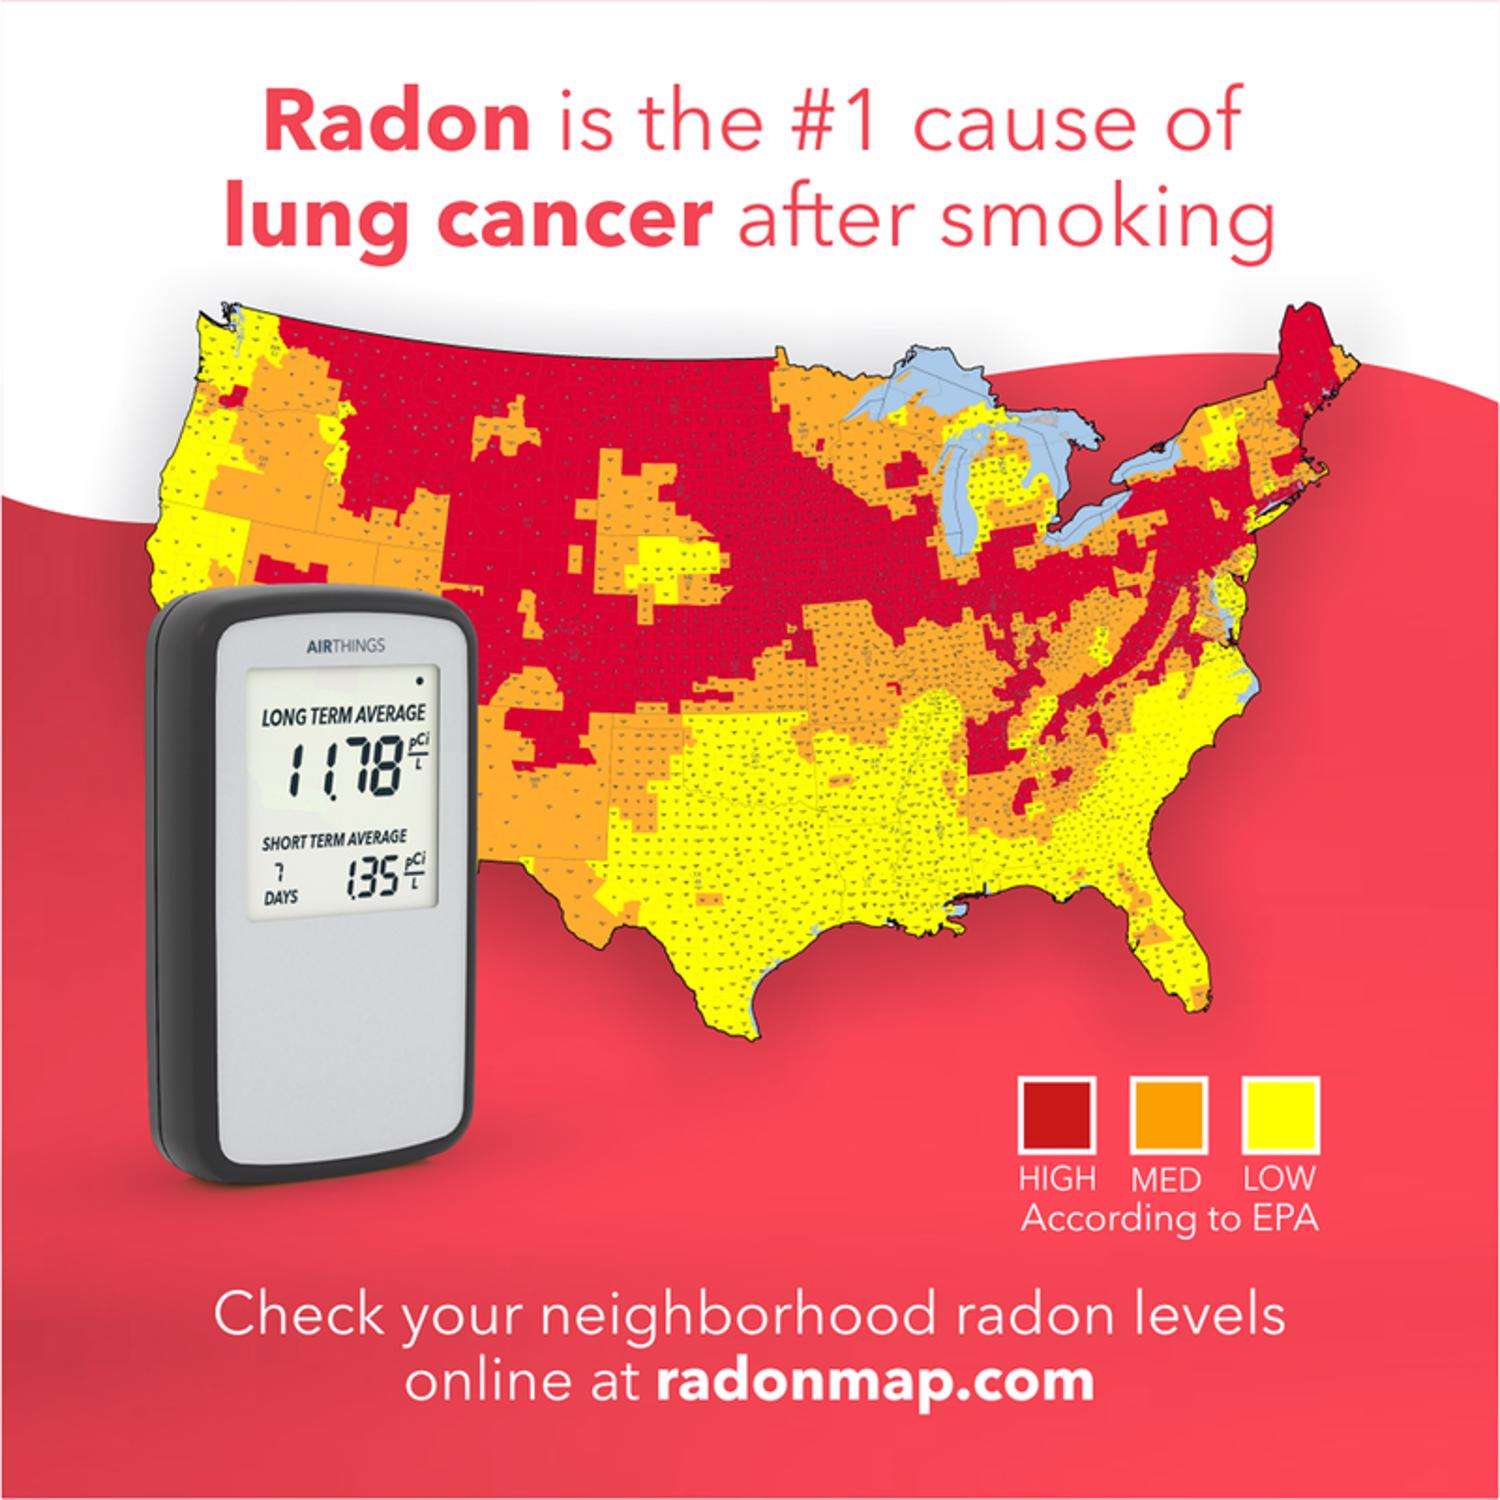 AIRTHINGS 223 Radon Detector User Guide